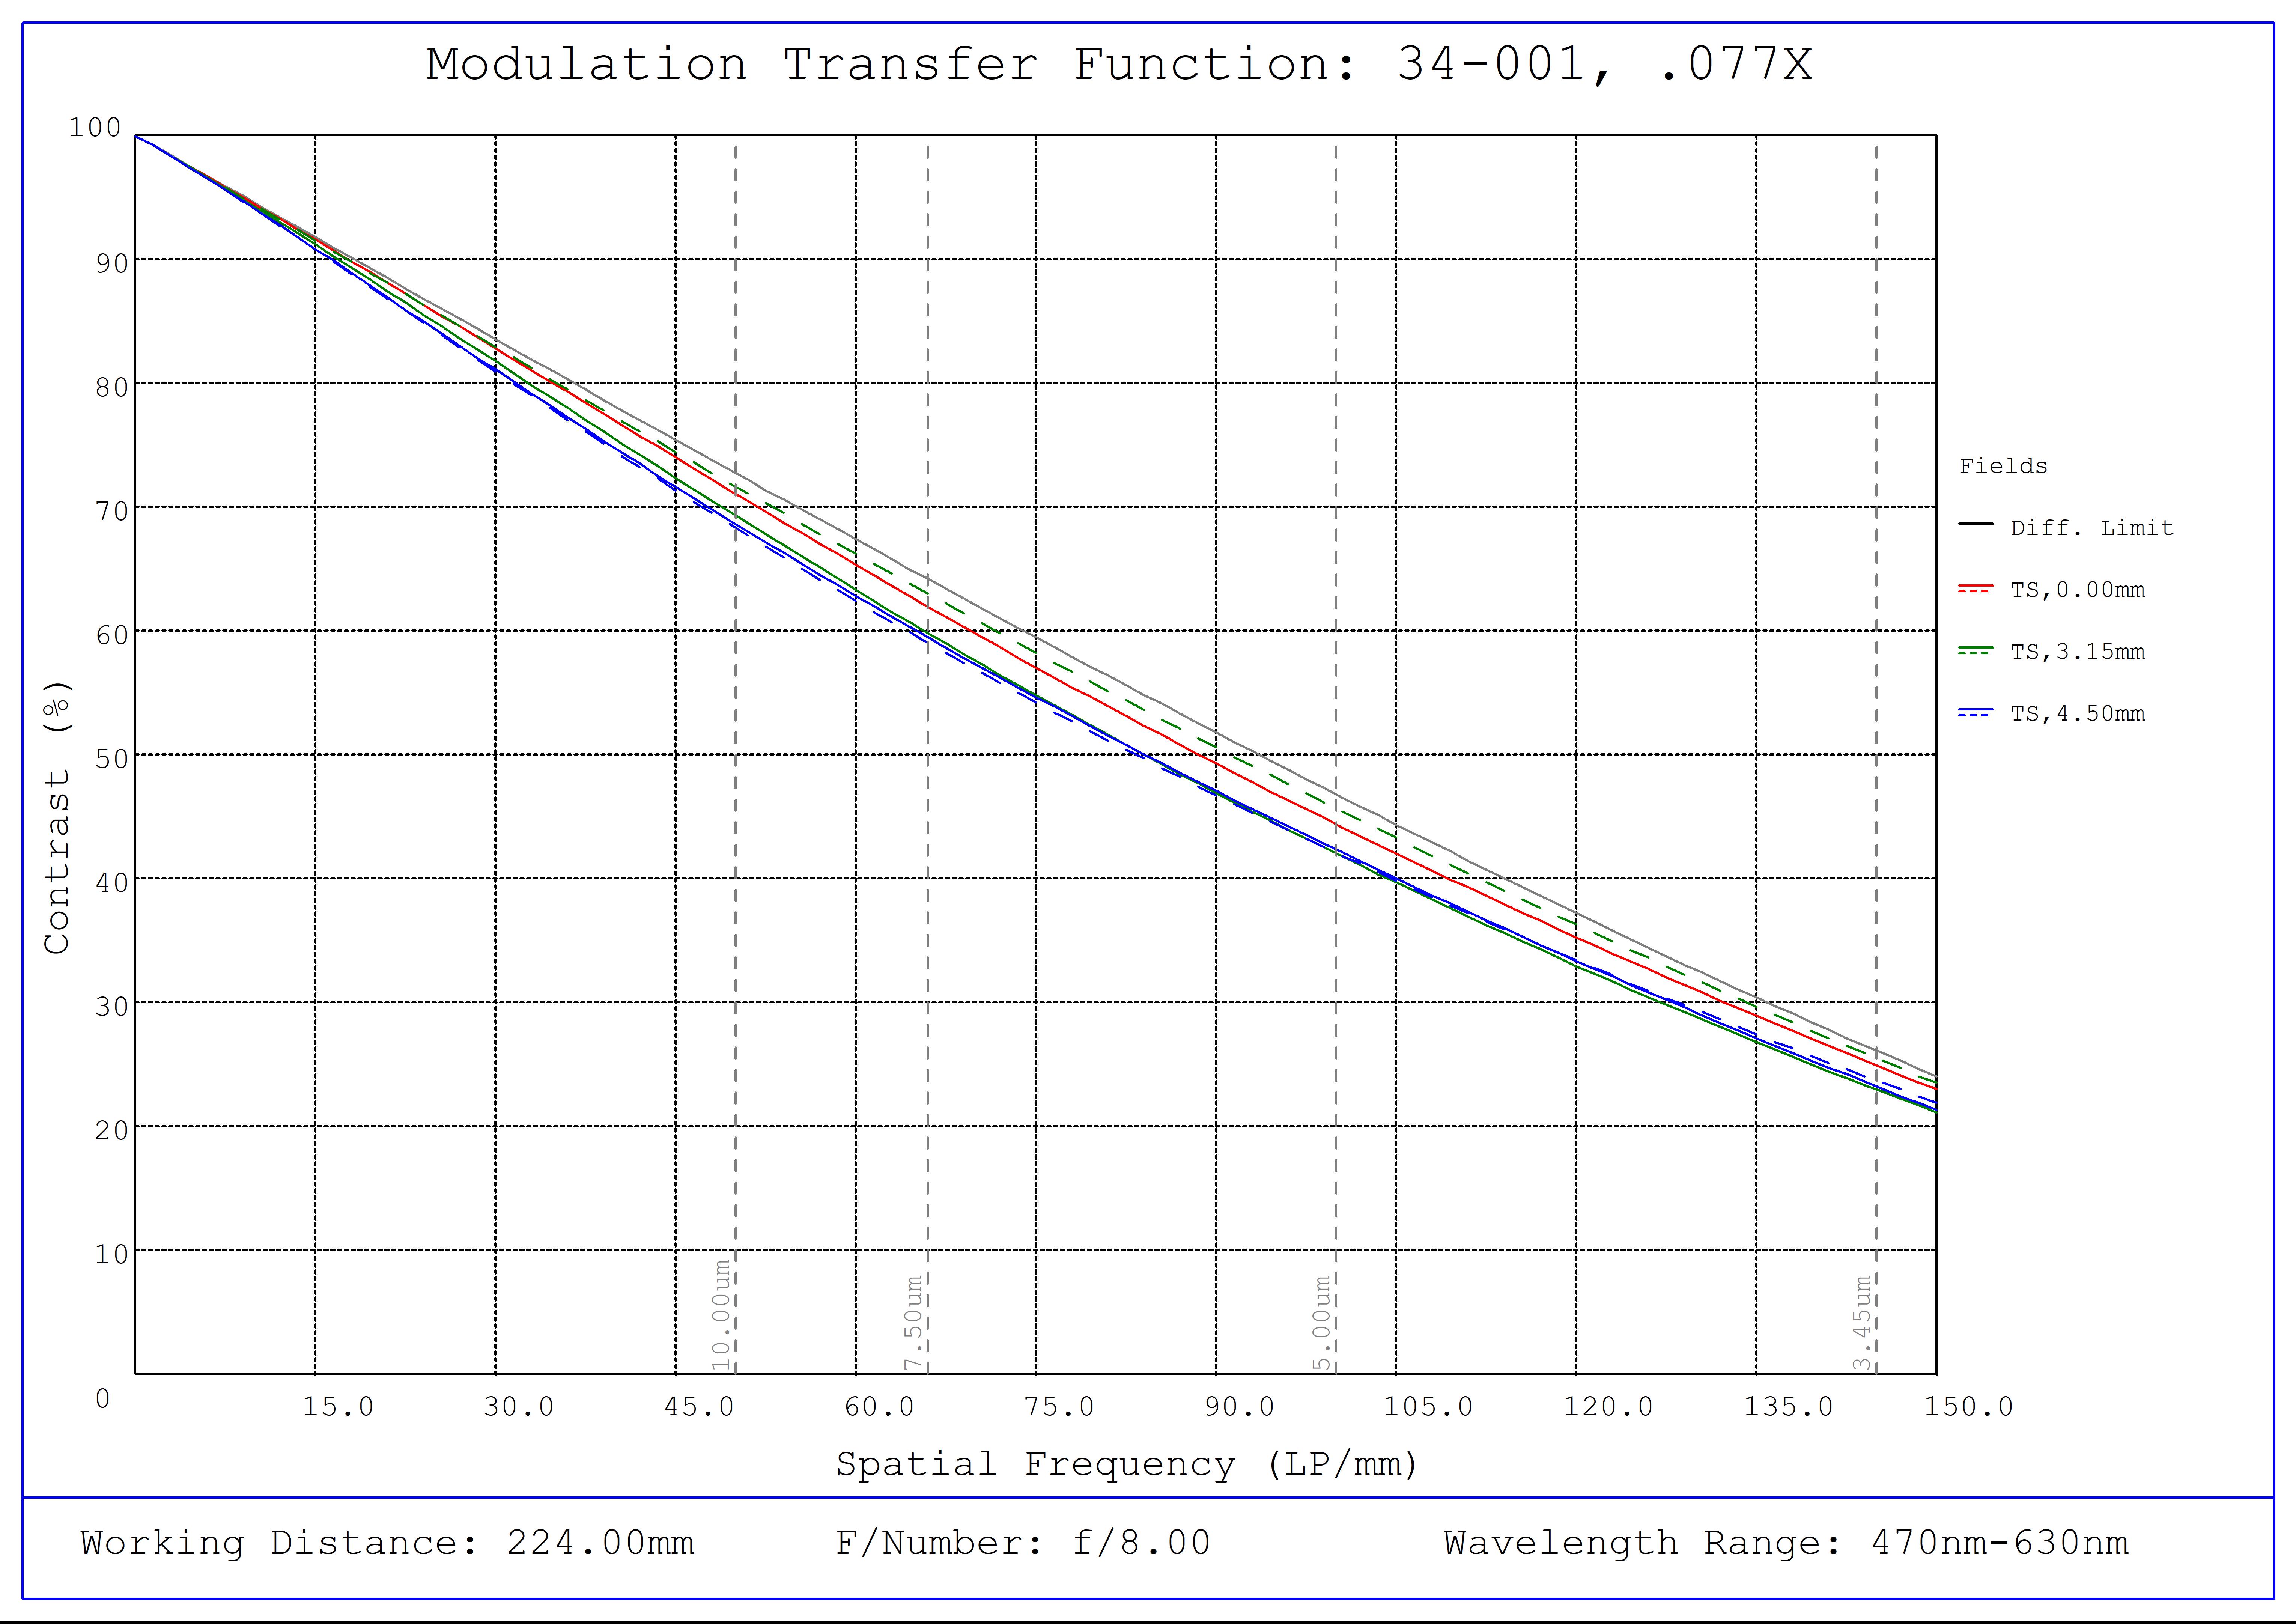 #34-001, 0.077X, 1/1.8" C-Mount TitanTL® Telecentric Lens, Modulated Transfer Function (MTF) Plot, 224mm Working Distance, f8